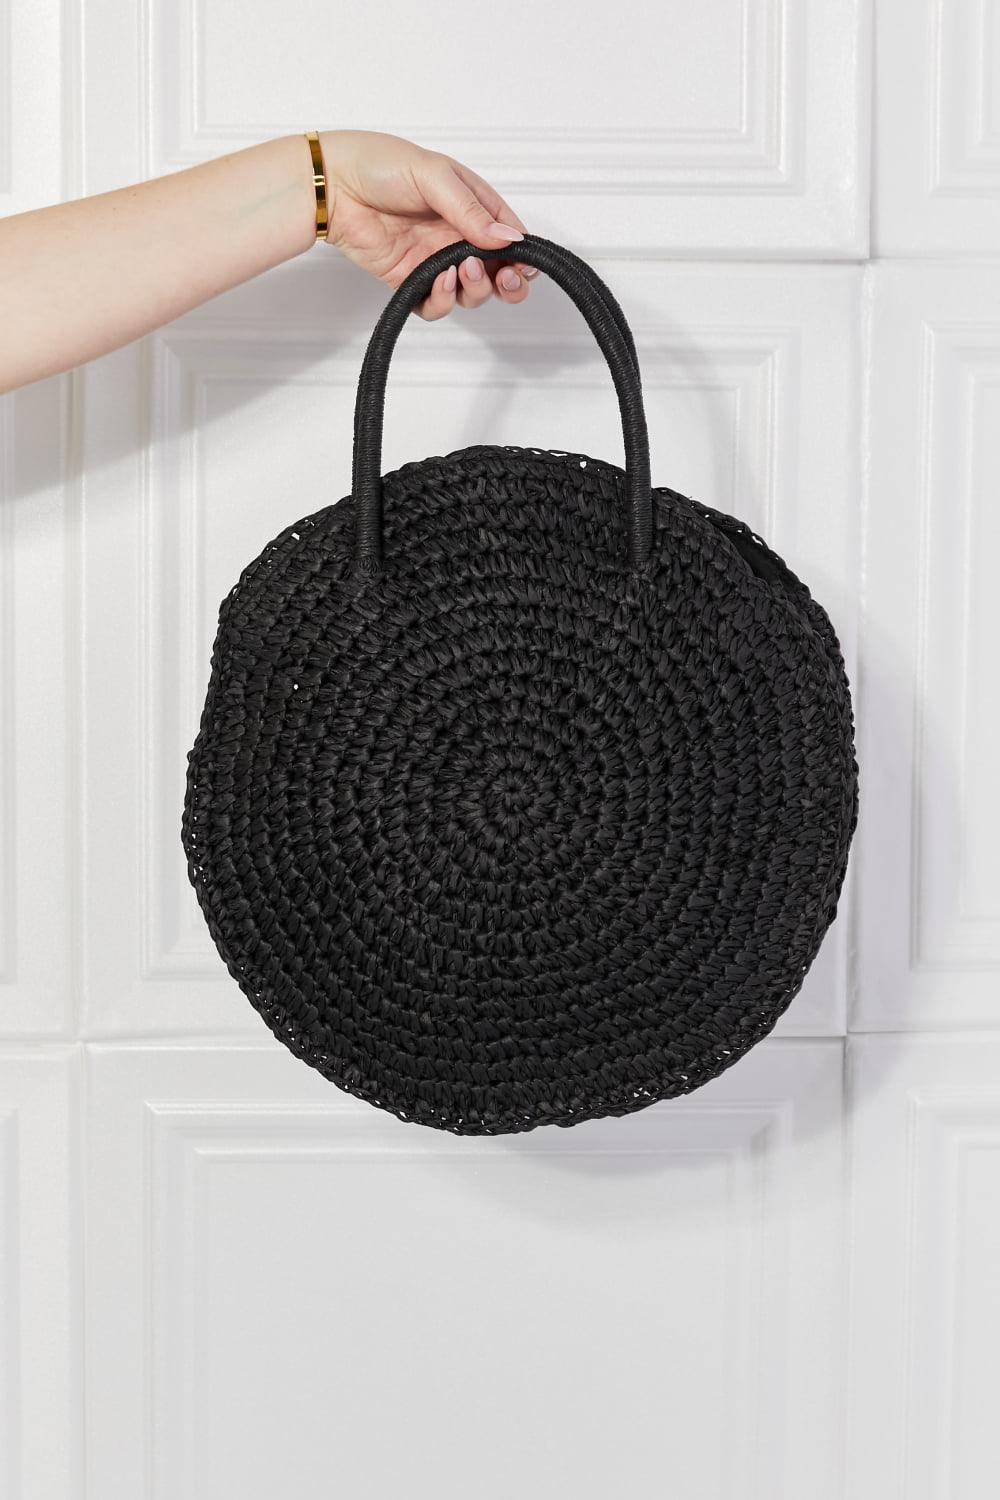 Justin Taylor Beach Date Straw Rattan Handbag in Black - The Fiery Jasmine